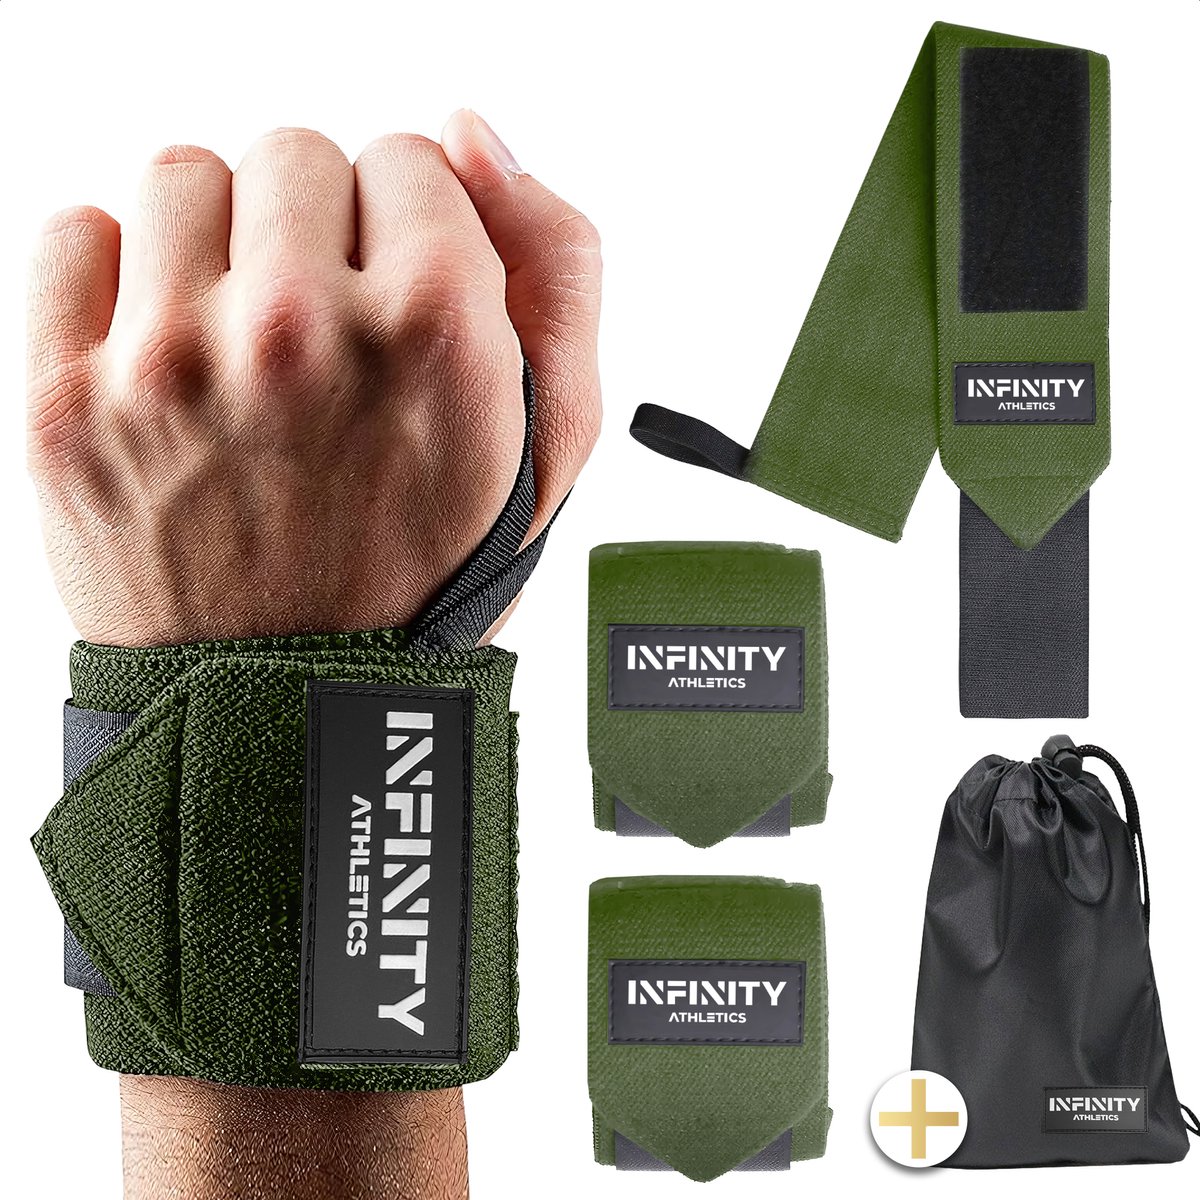 INFINITY ATHLETICS Wrist Wraps - Fitness, CrossFit & Powerliften - Krachttraining Polsband - Sterk Klittenband - Til Zwaardere Gewichten - Gratis Opbergzakje - Groen